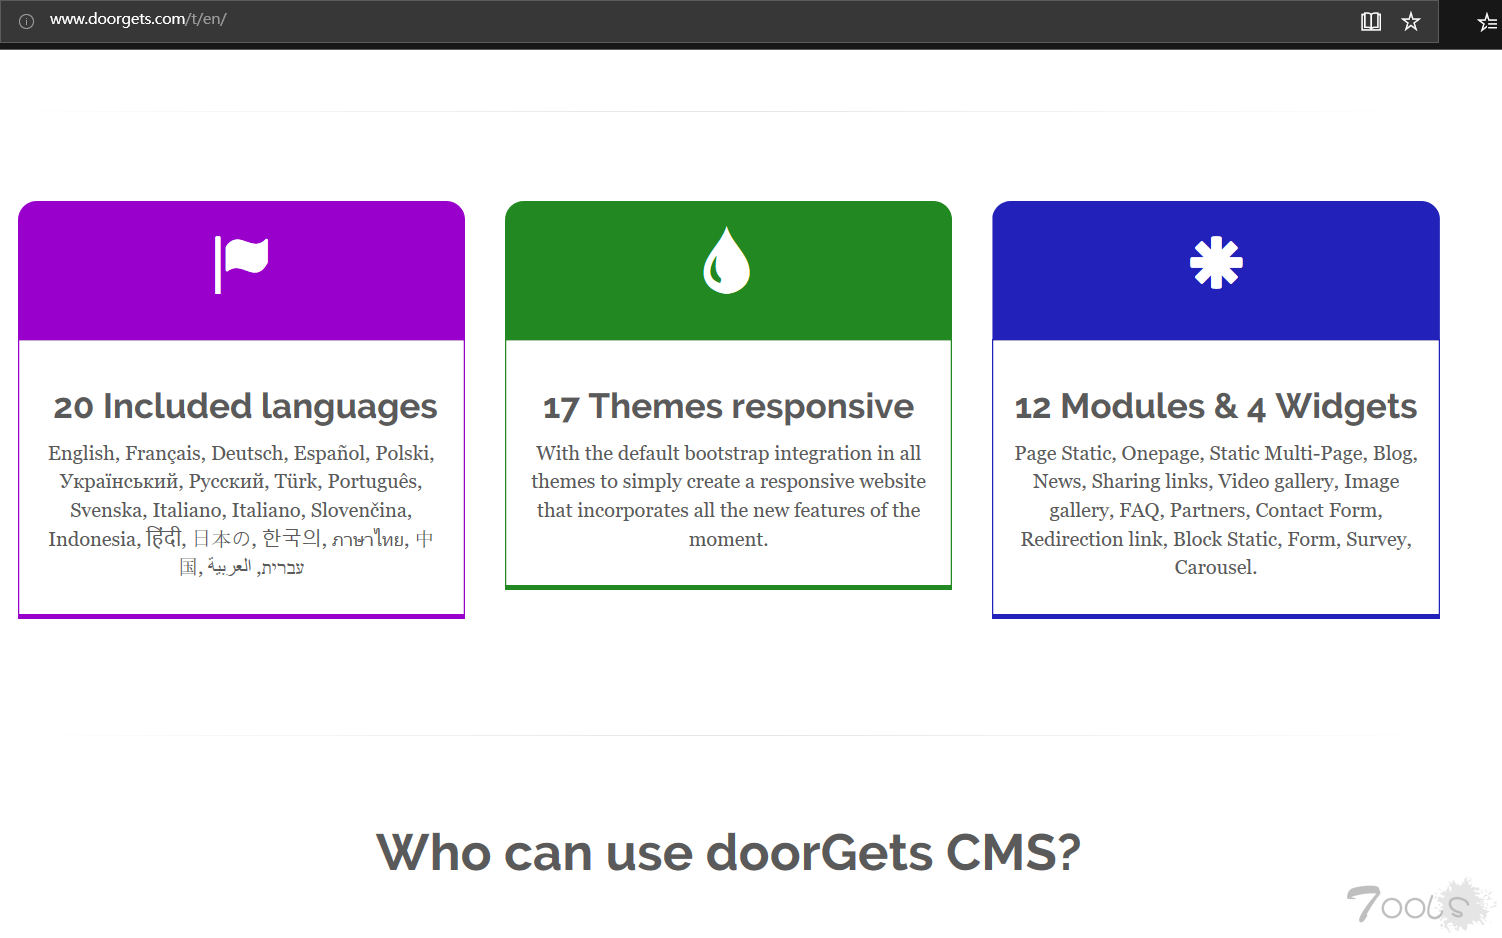 doorgets_CMS7.0(http://www.doorgets.com/t/en/)存在任意文件下载漏洞